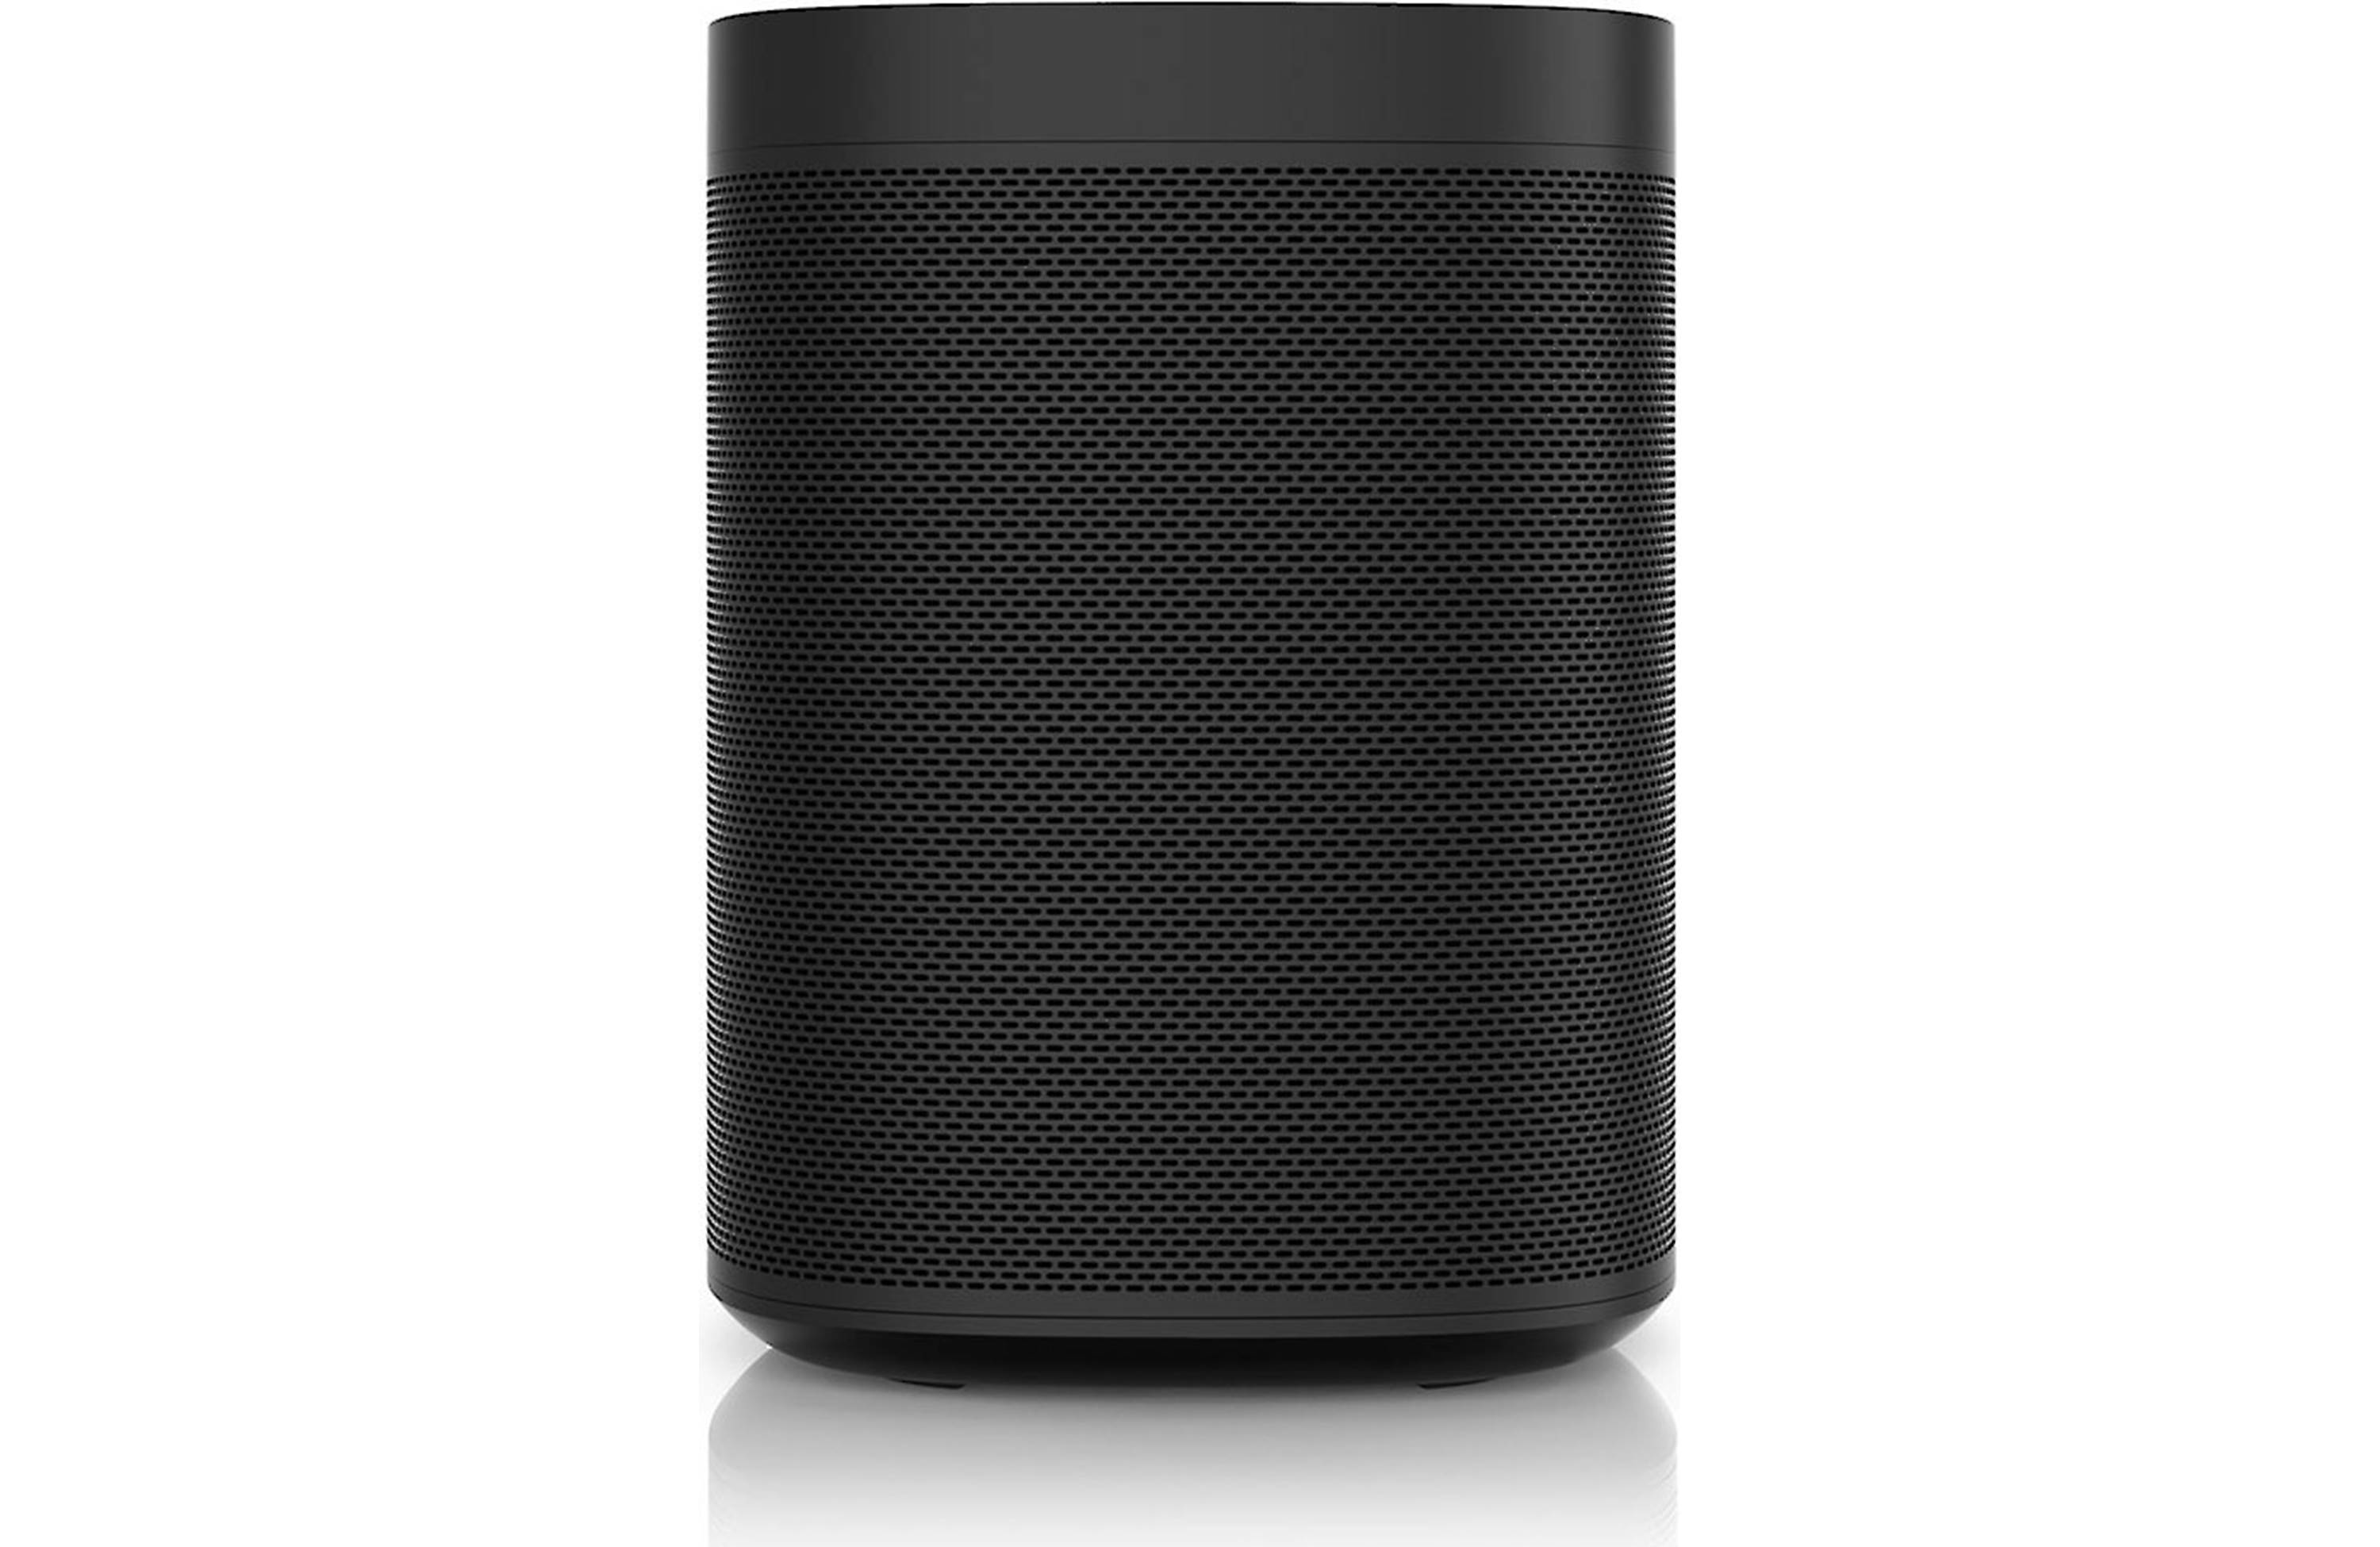 Sonos One Gen 2 Wireless Speaker with Amazon Alexa Voice Assistant